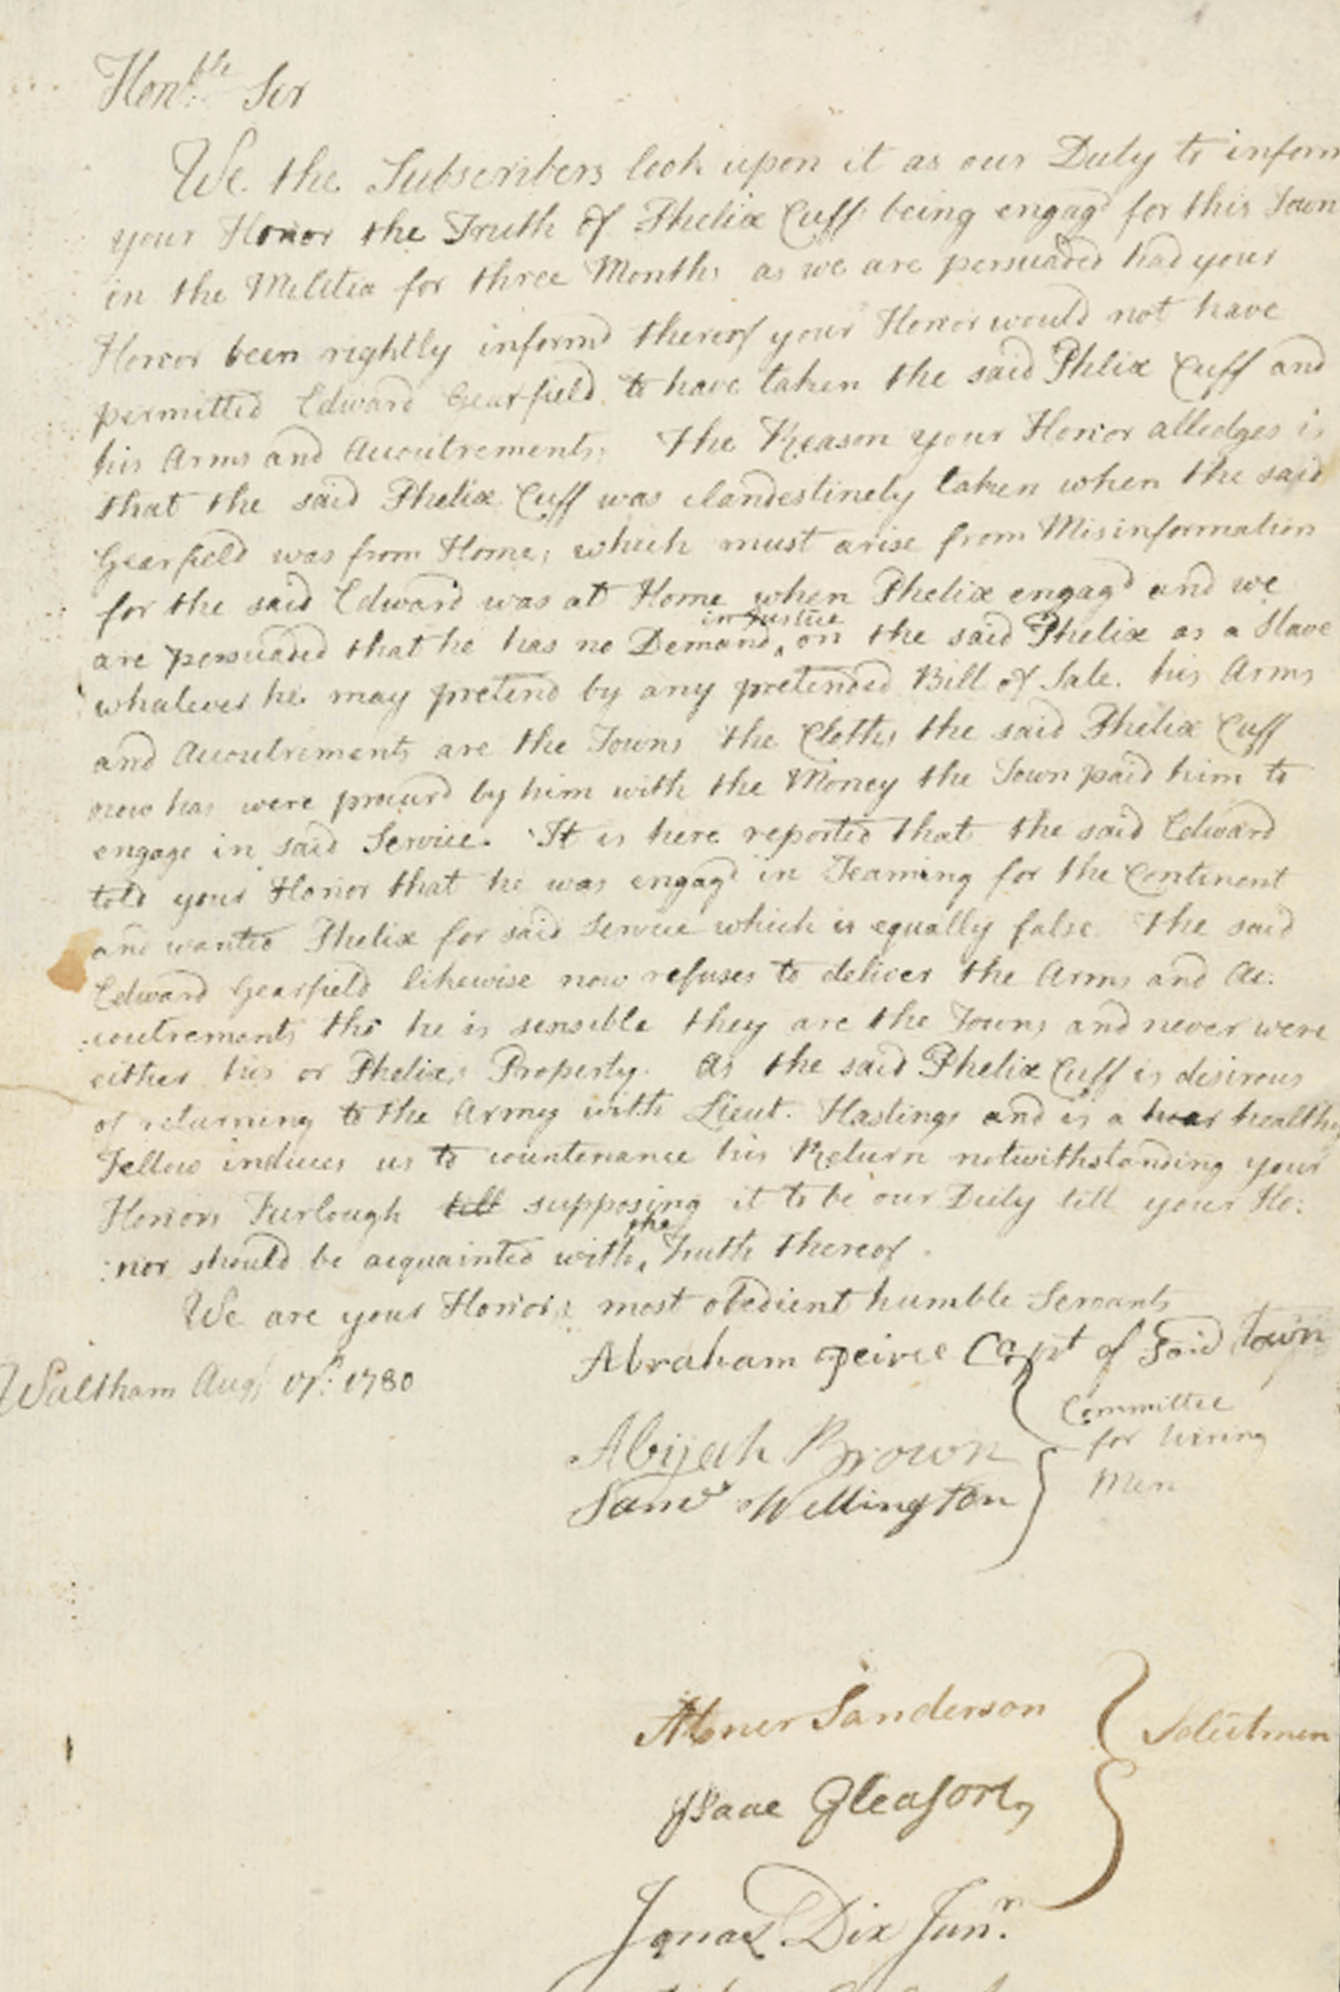 Letter regarding Phelix Cuff's service in the militia